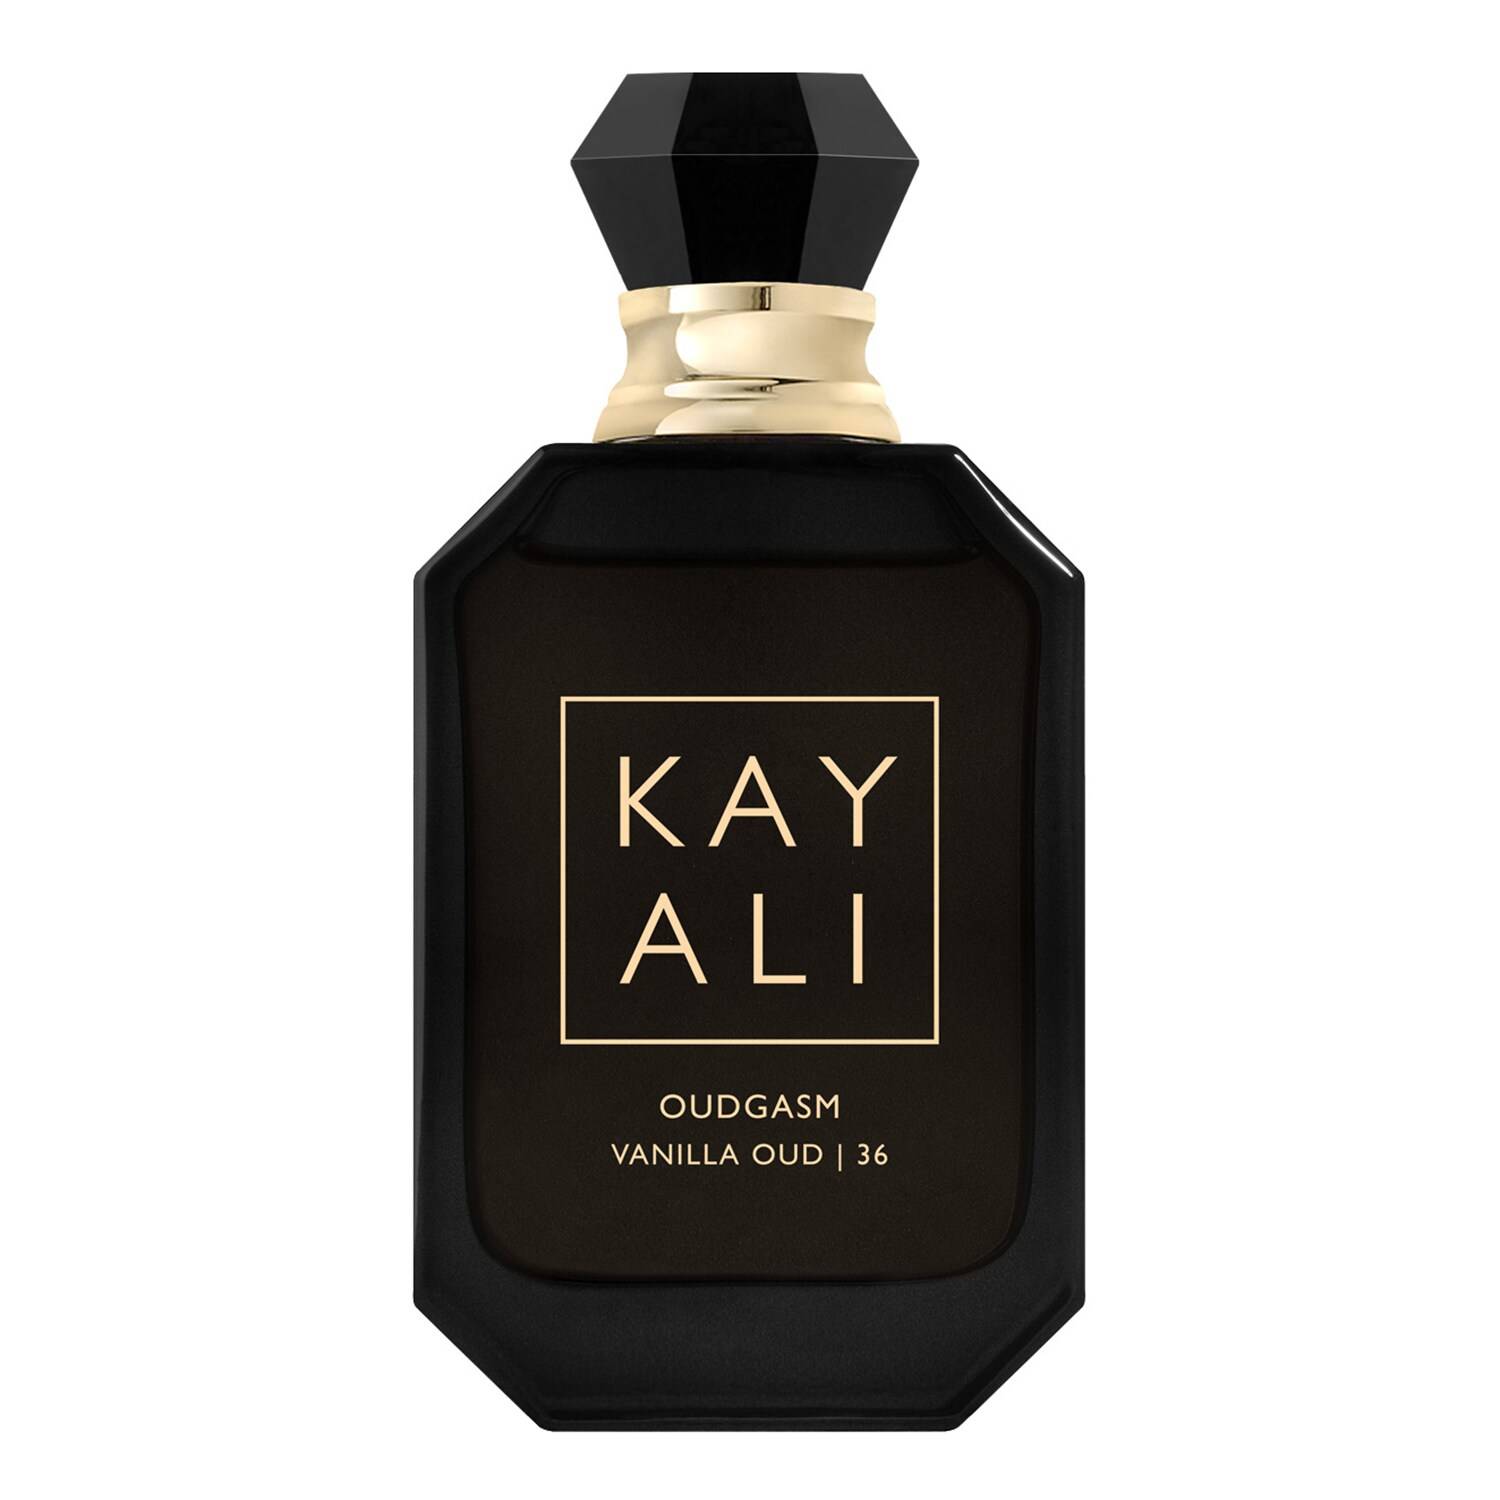 Kayali Oudgasm Vanilla Oud - 36 Eau De Parfum Intense 50Ml